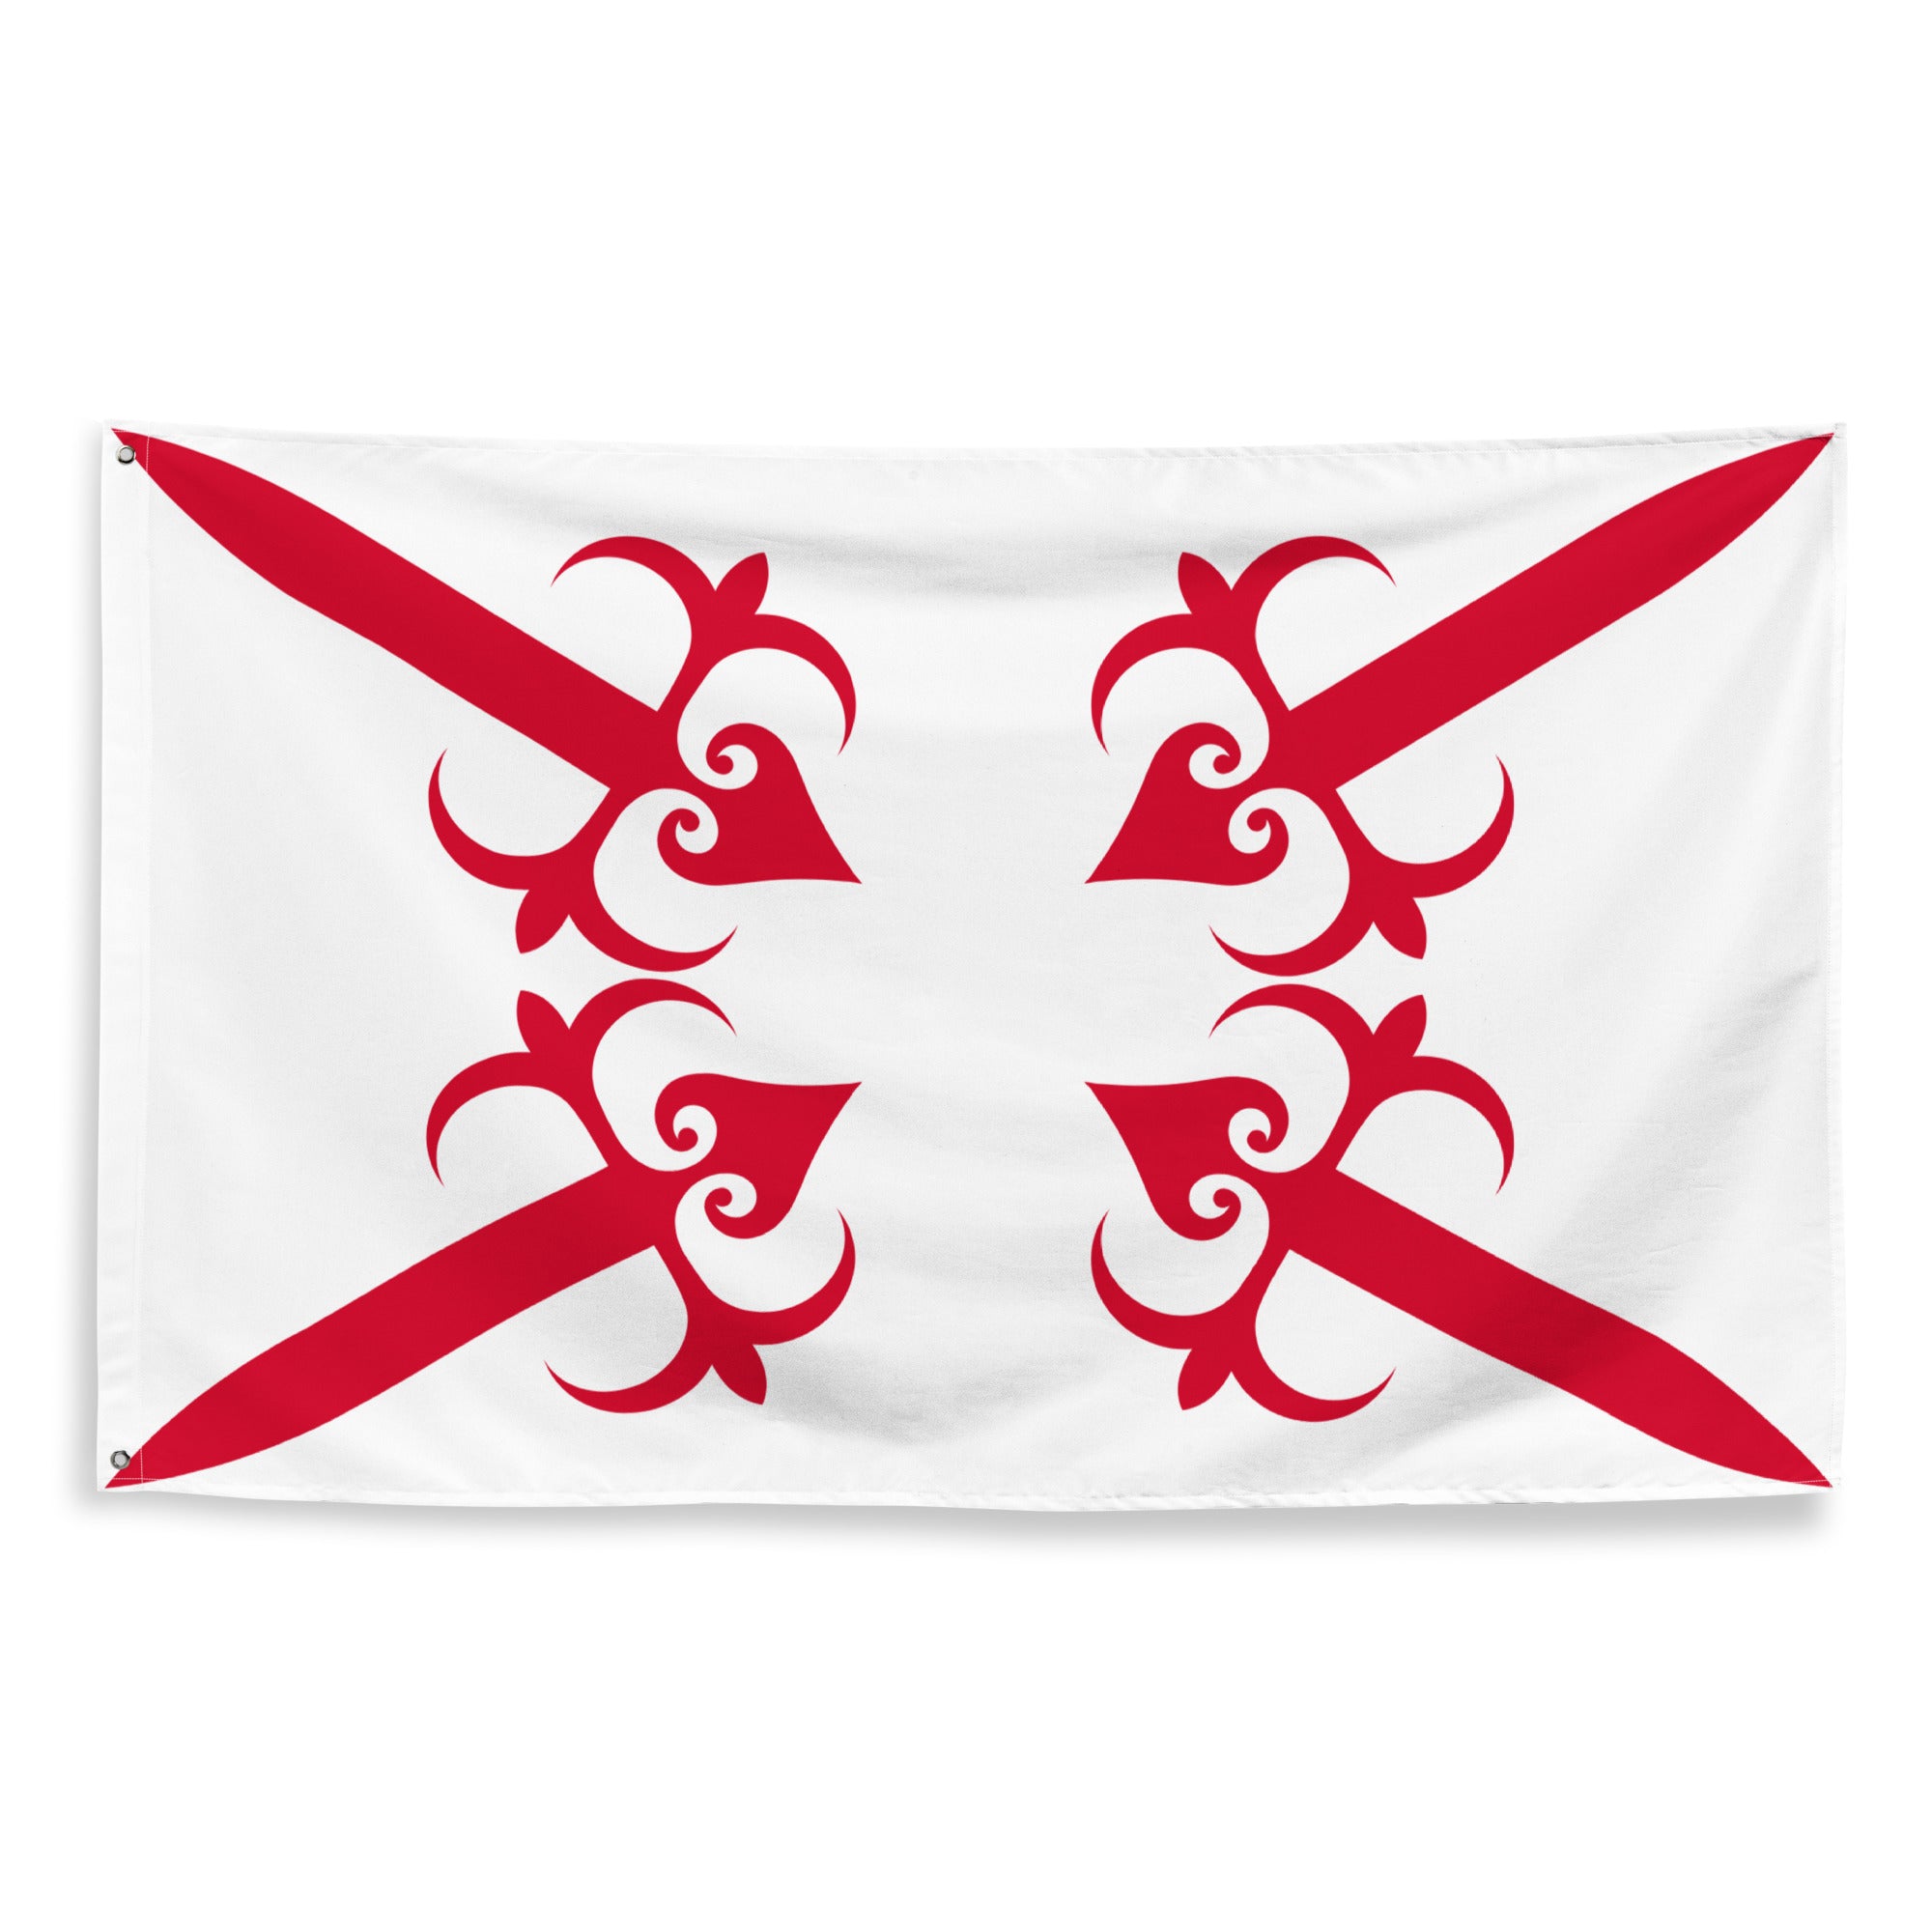 Bandeira Cruzada da Borgonha